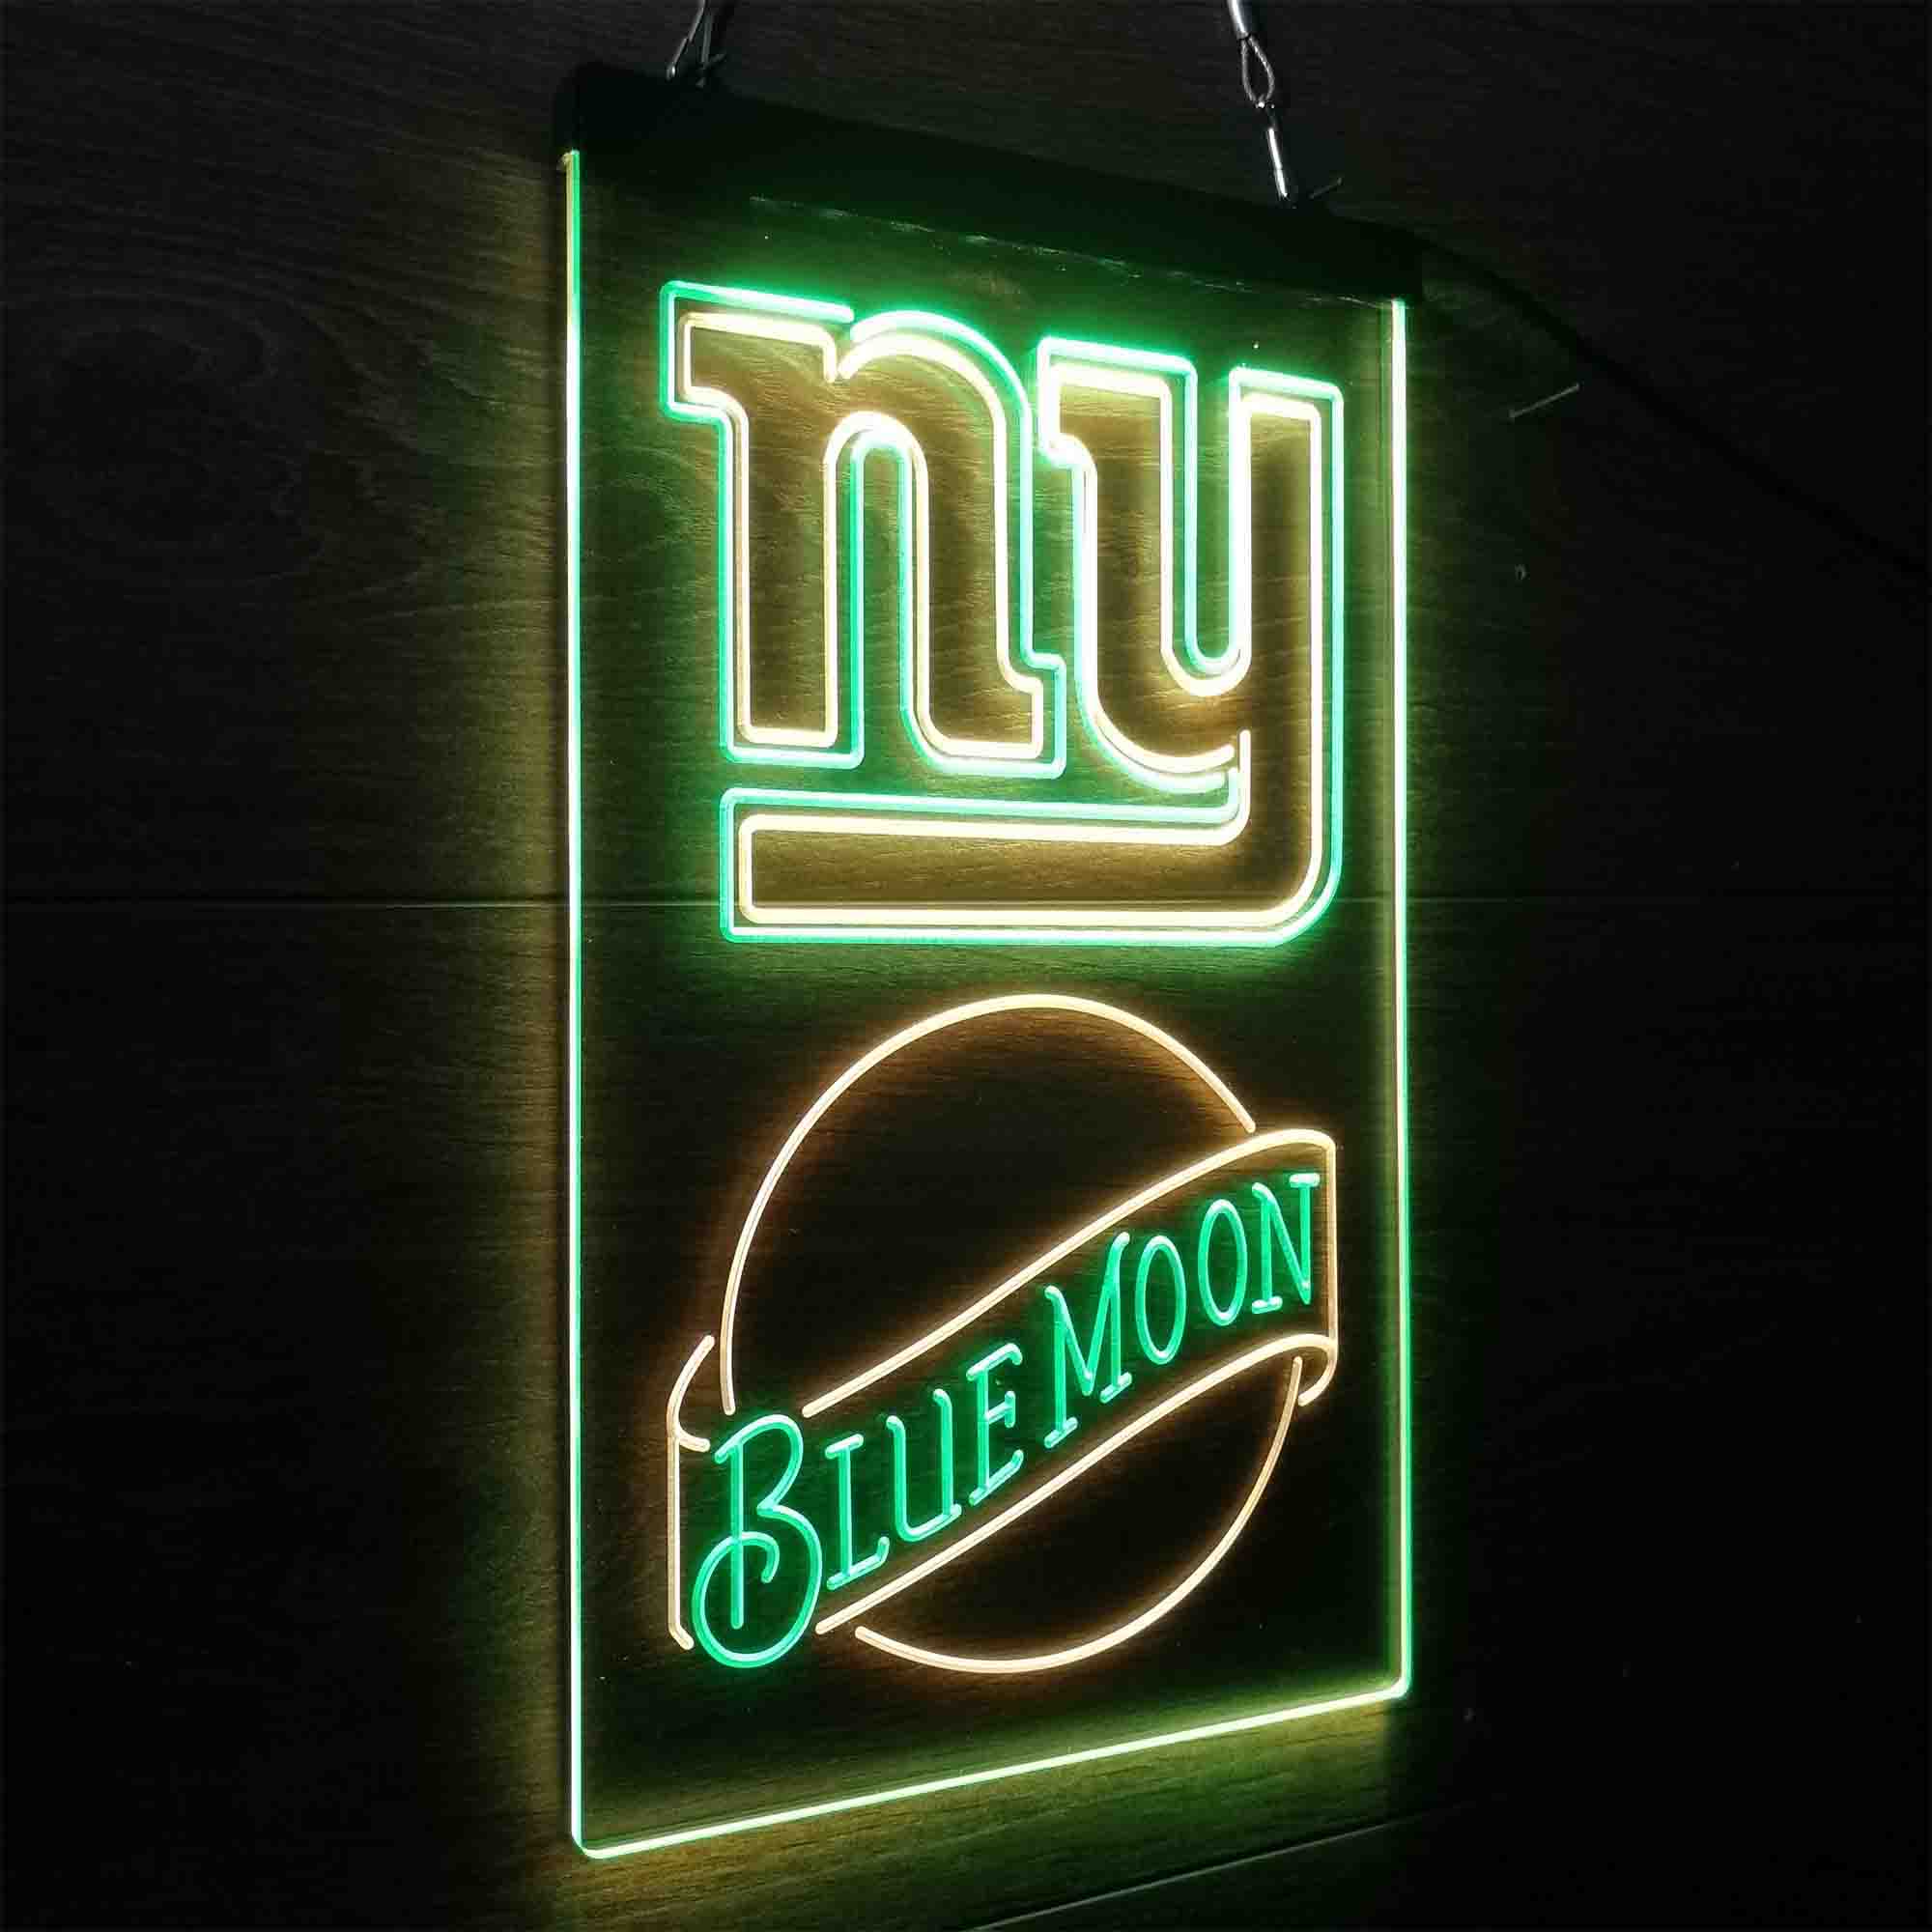 Blue Moon Bar New York Giants Est. 1925 LED Neon Sign